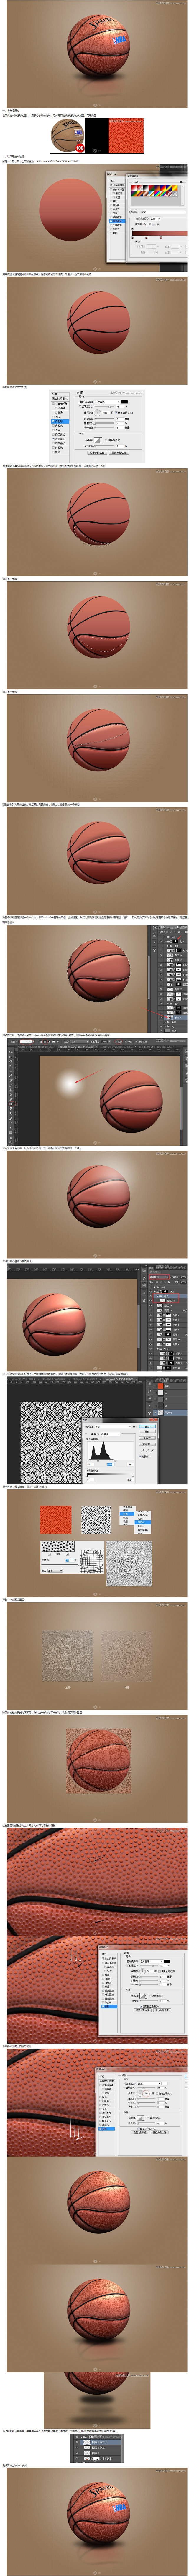 Photoshop绘制立体风格的篮球效果...